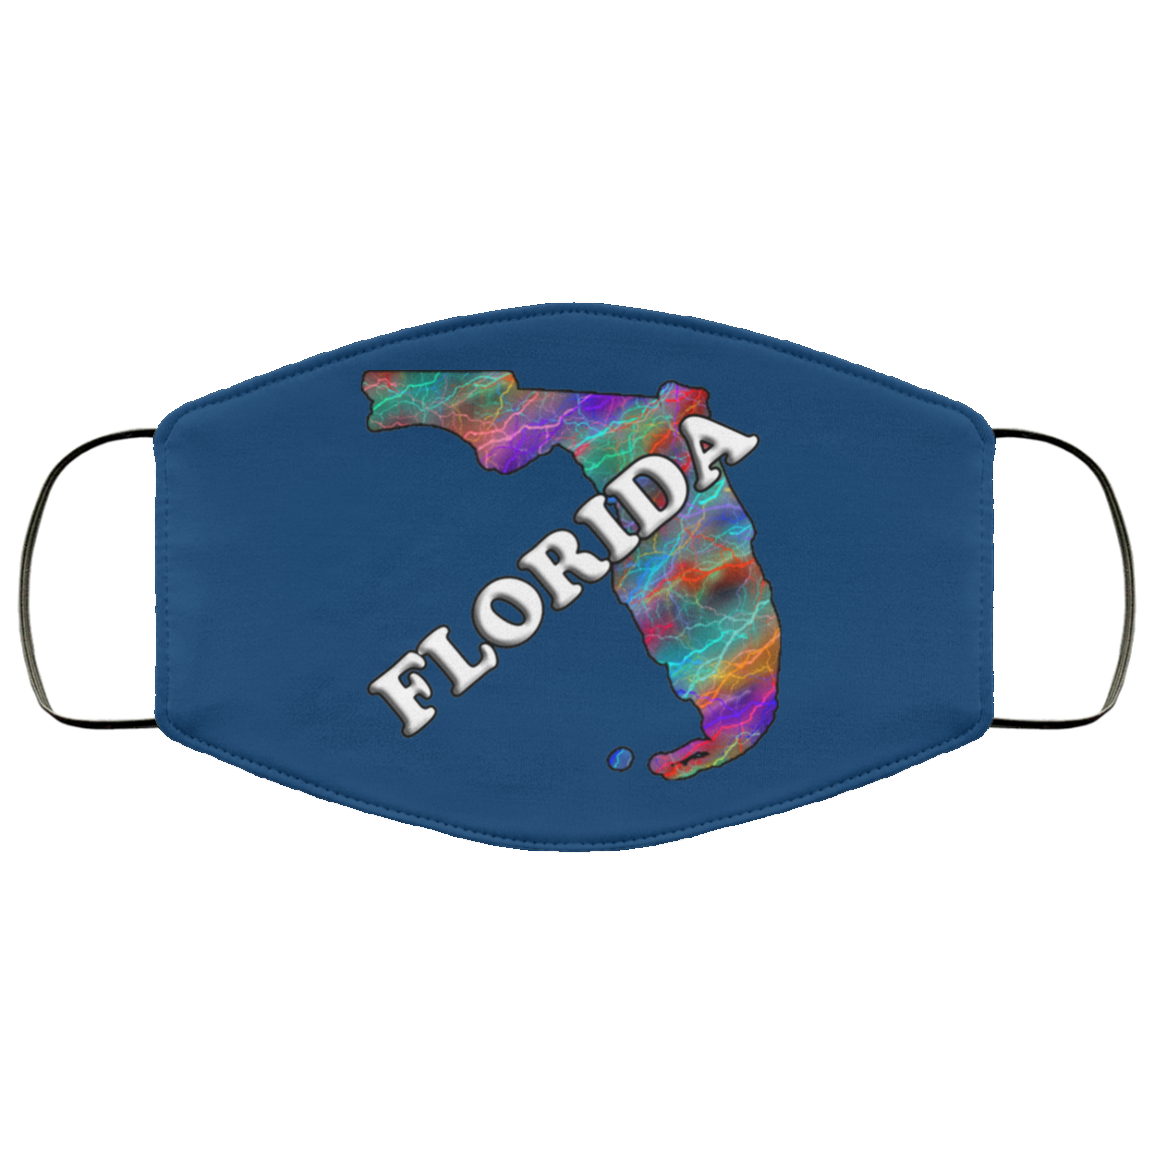 Florida 2 Layer Protective Face Mask